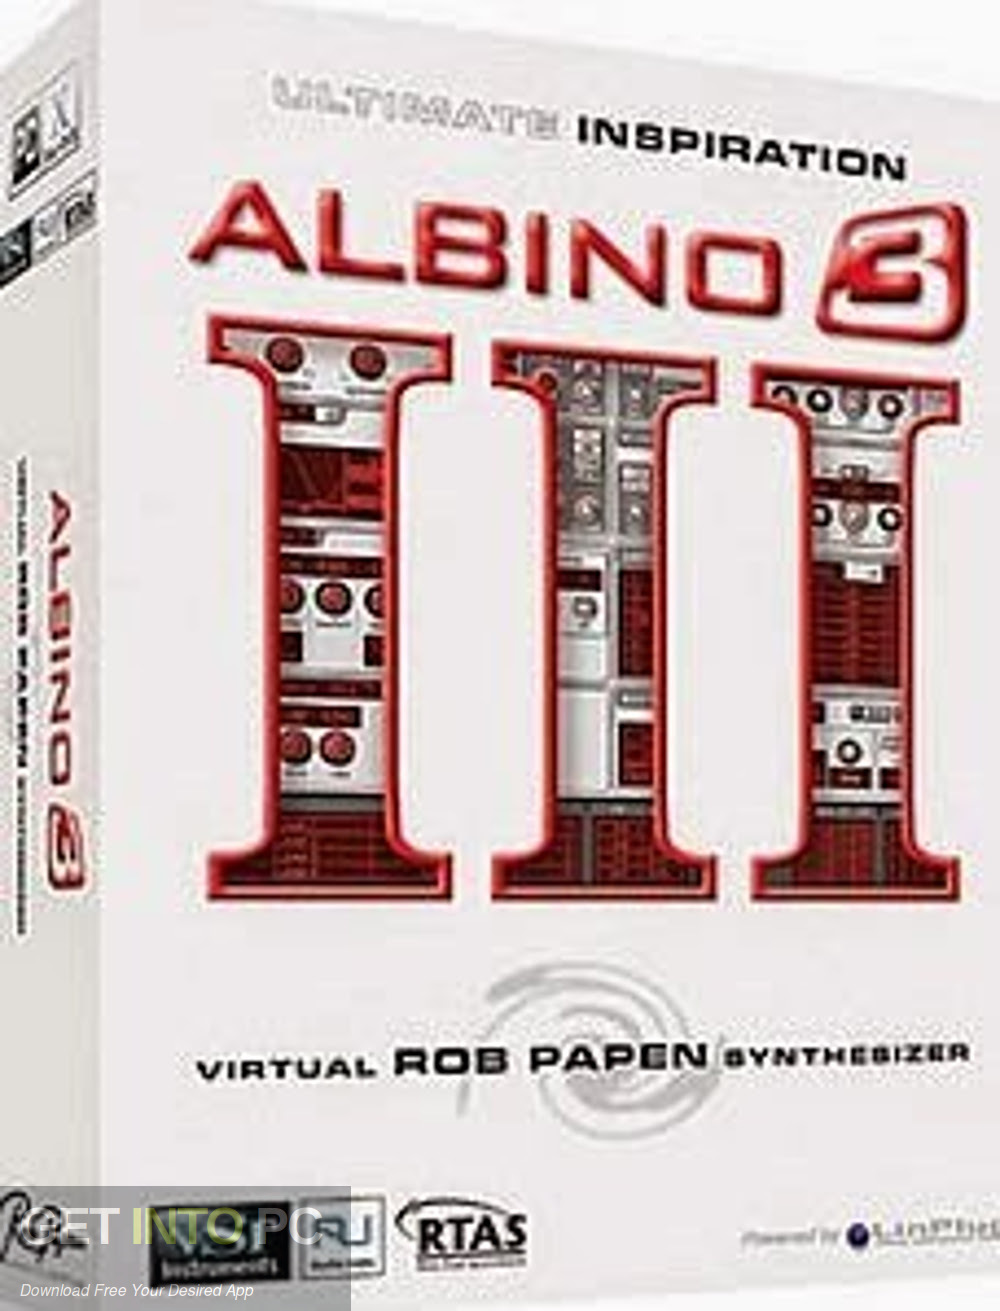 albino 3 vst free download mac